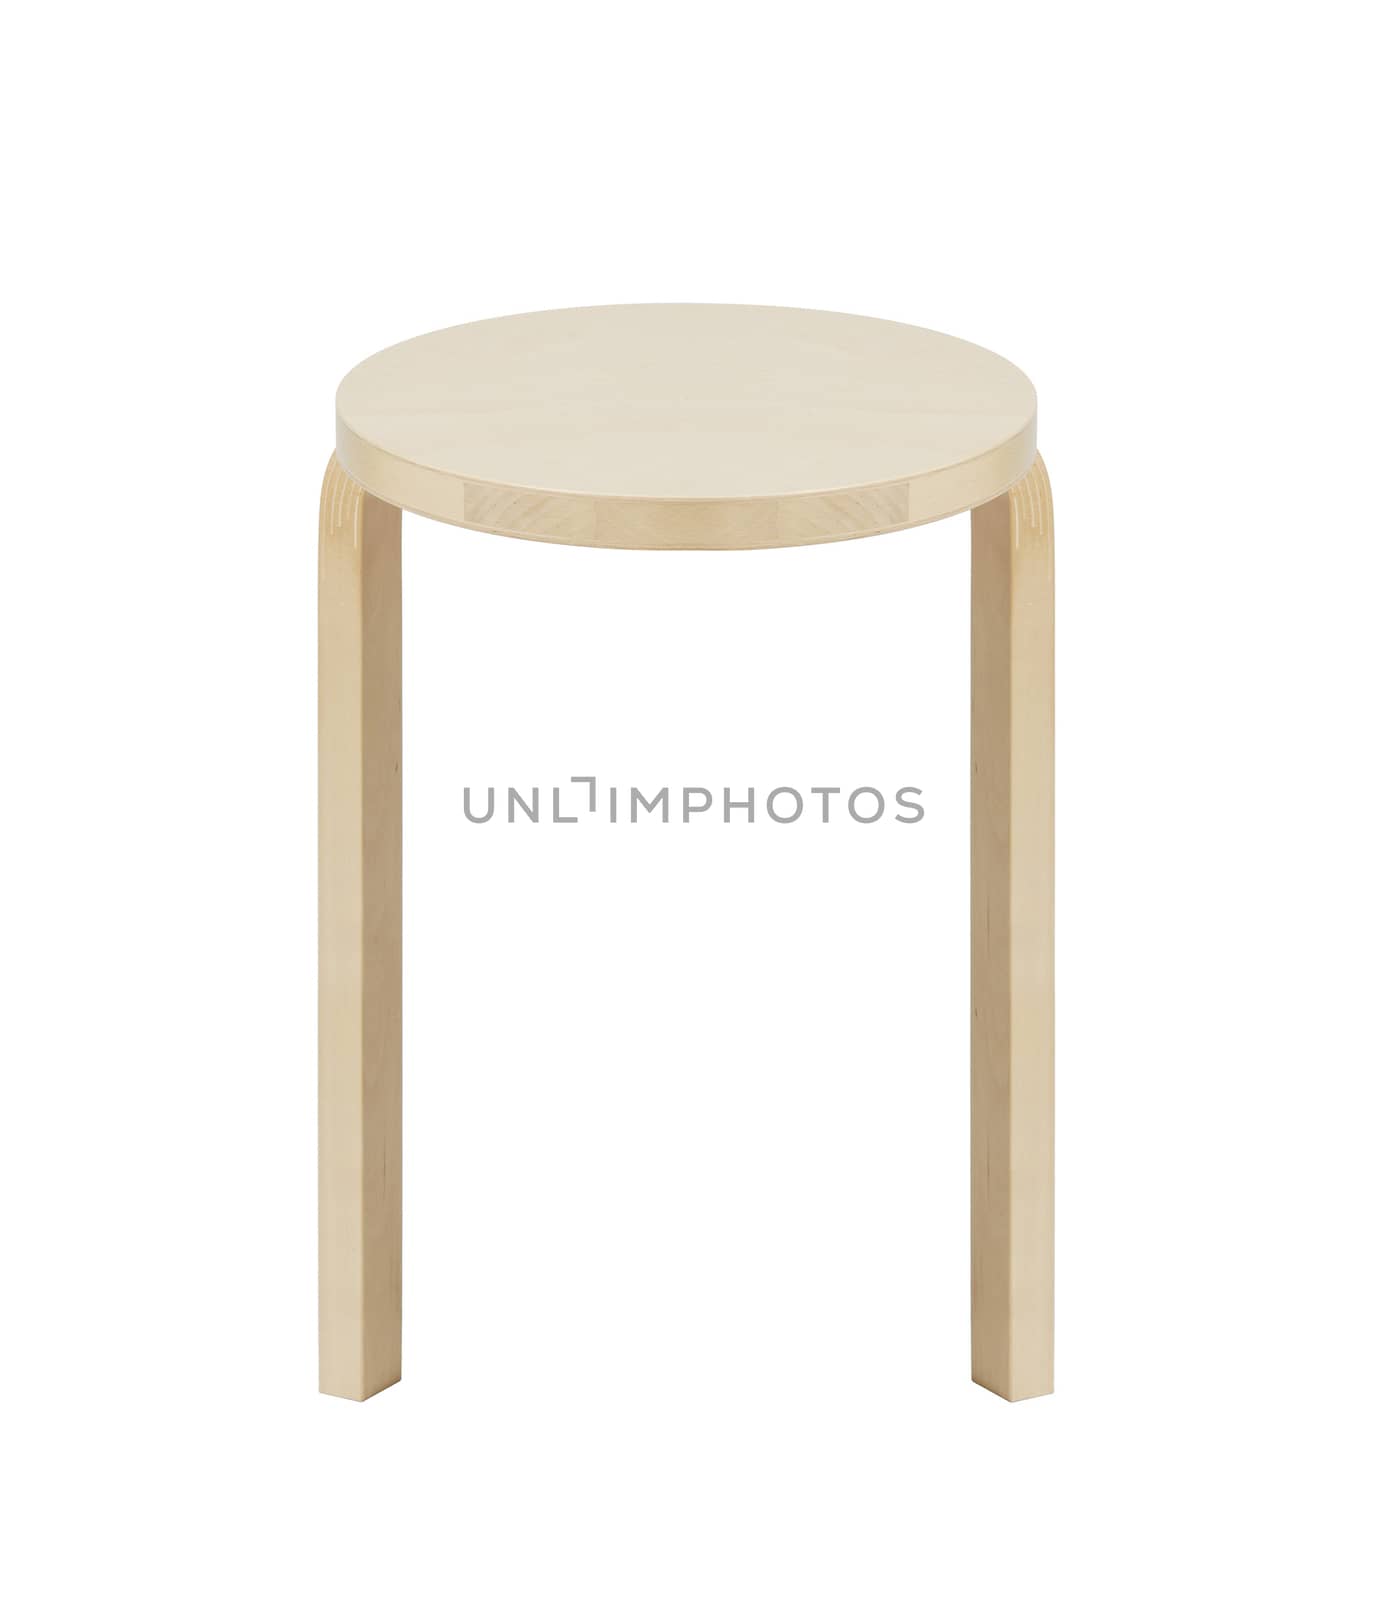 lassic round wooden kitchen stool by ozaiachin